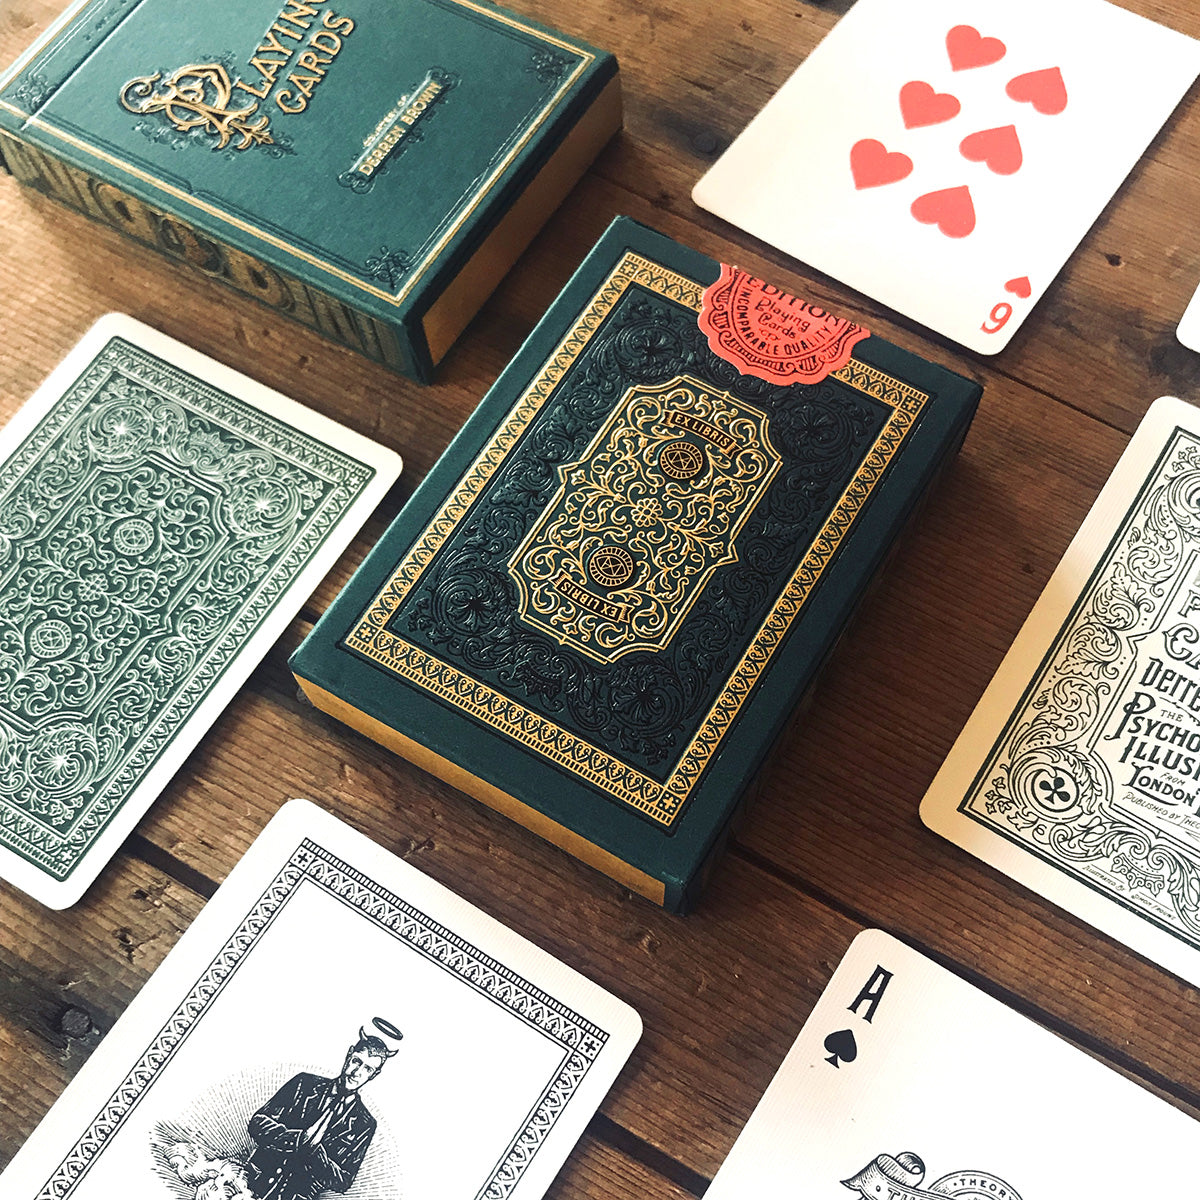 Derren Brown playing cards deck - MR CUP